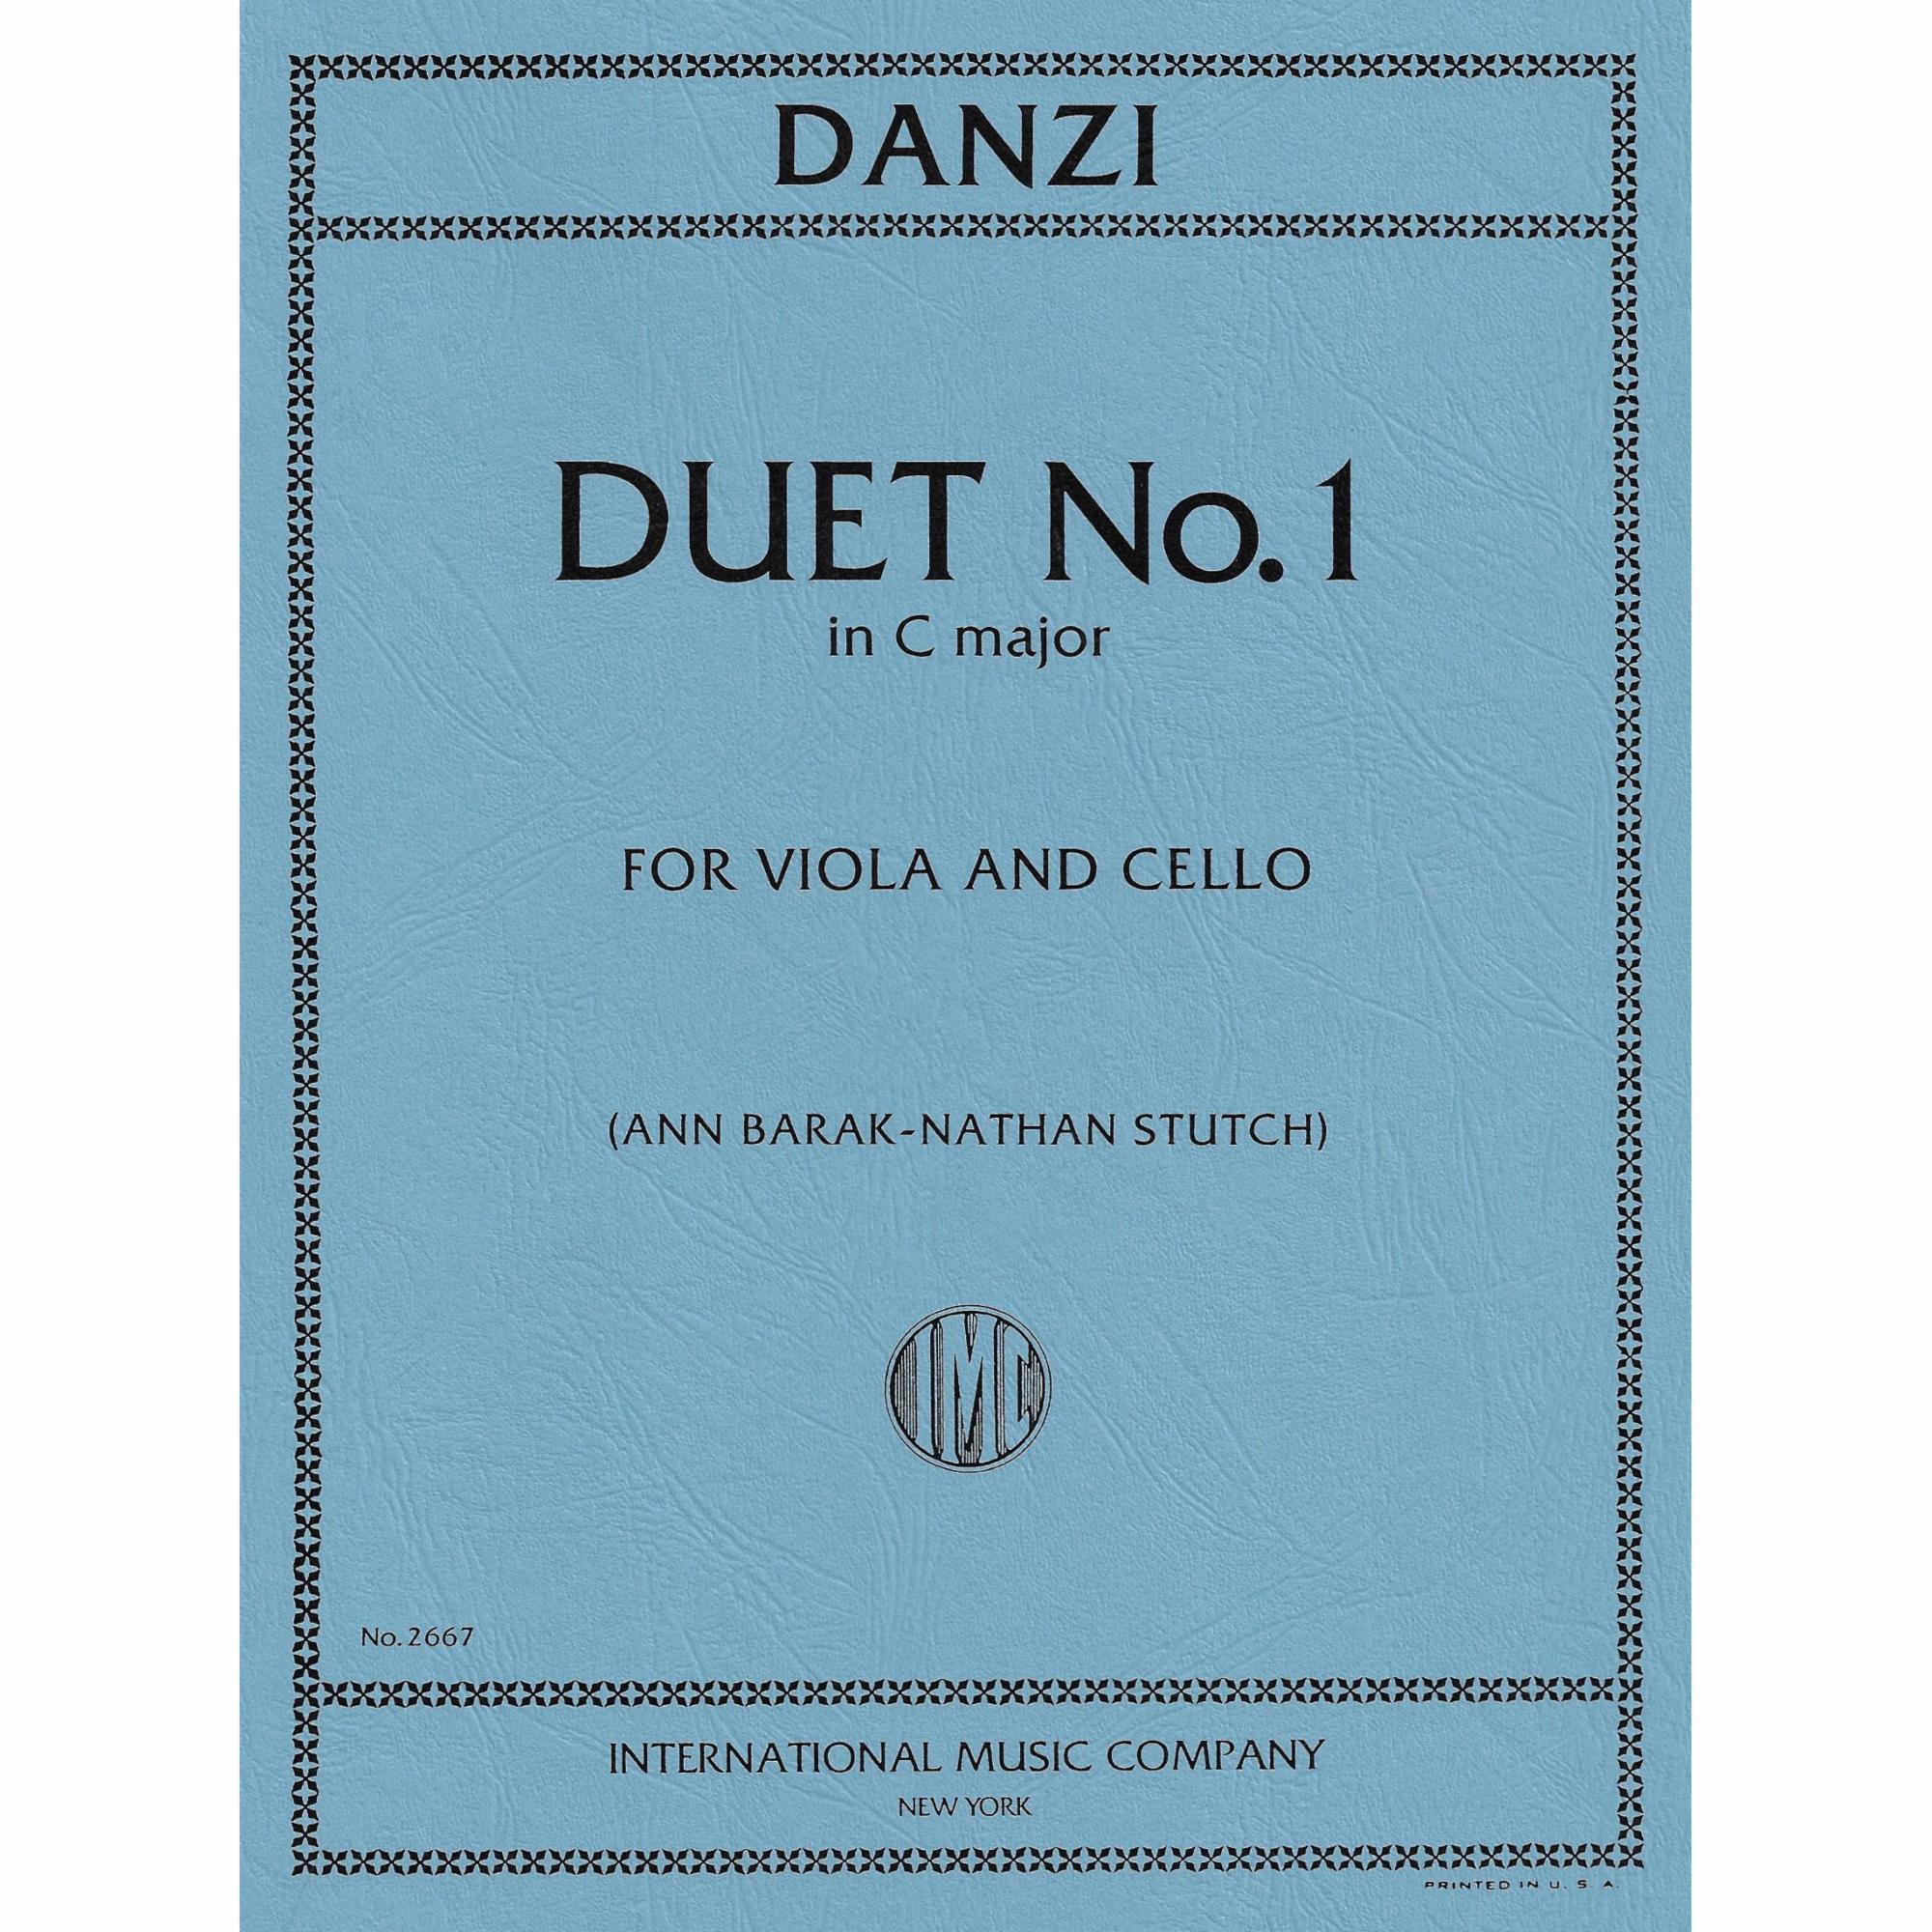 Danzi -- Duet No. 1 in C Major for Viola and Cello